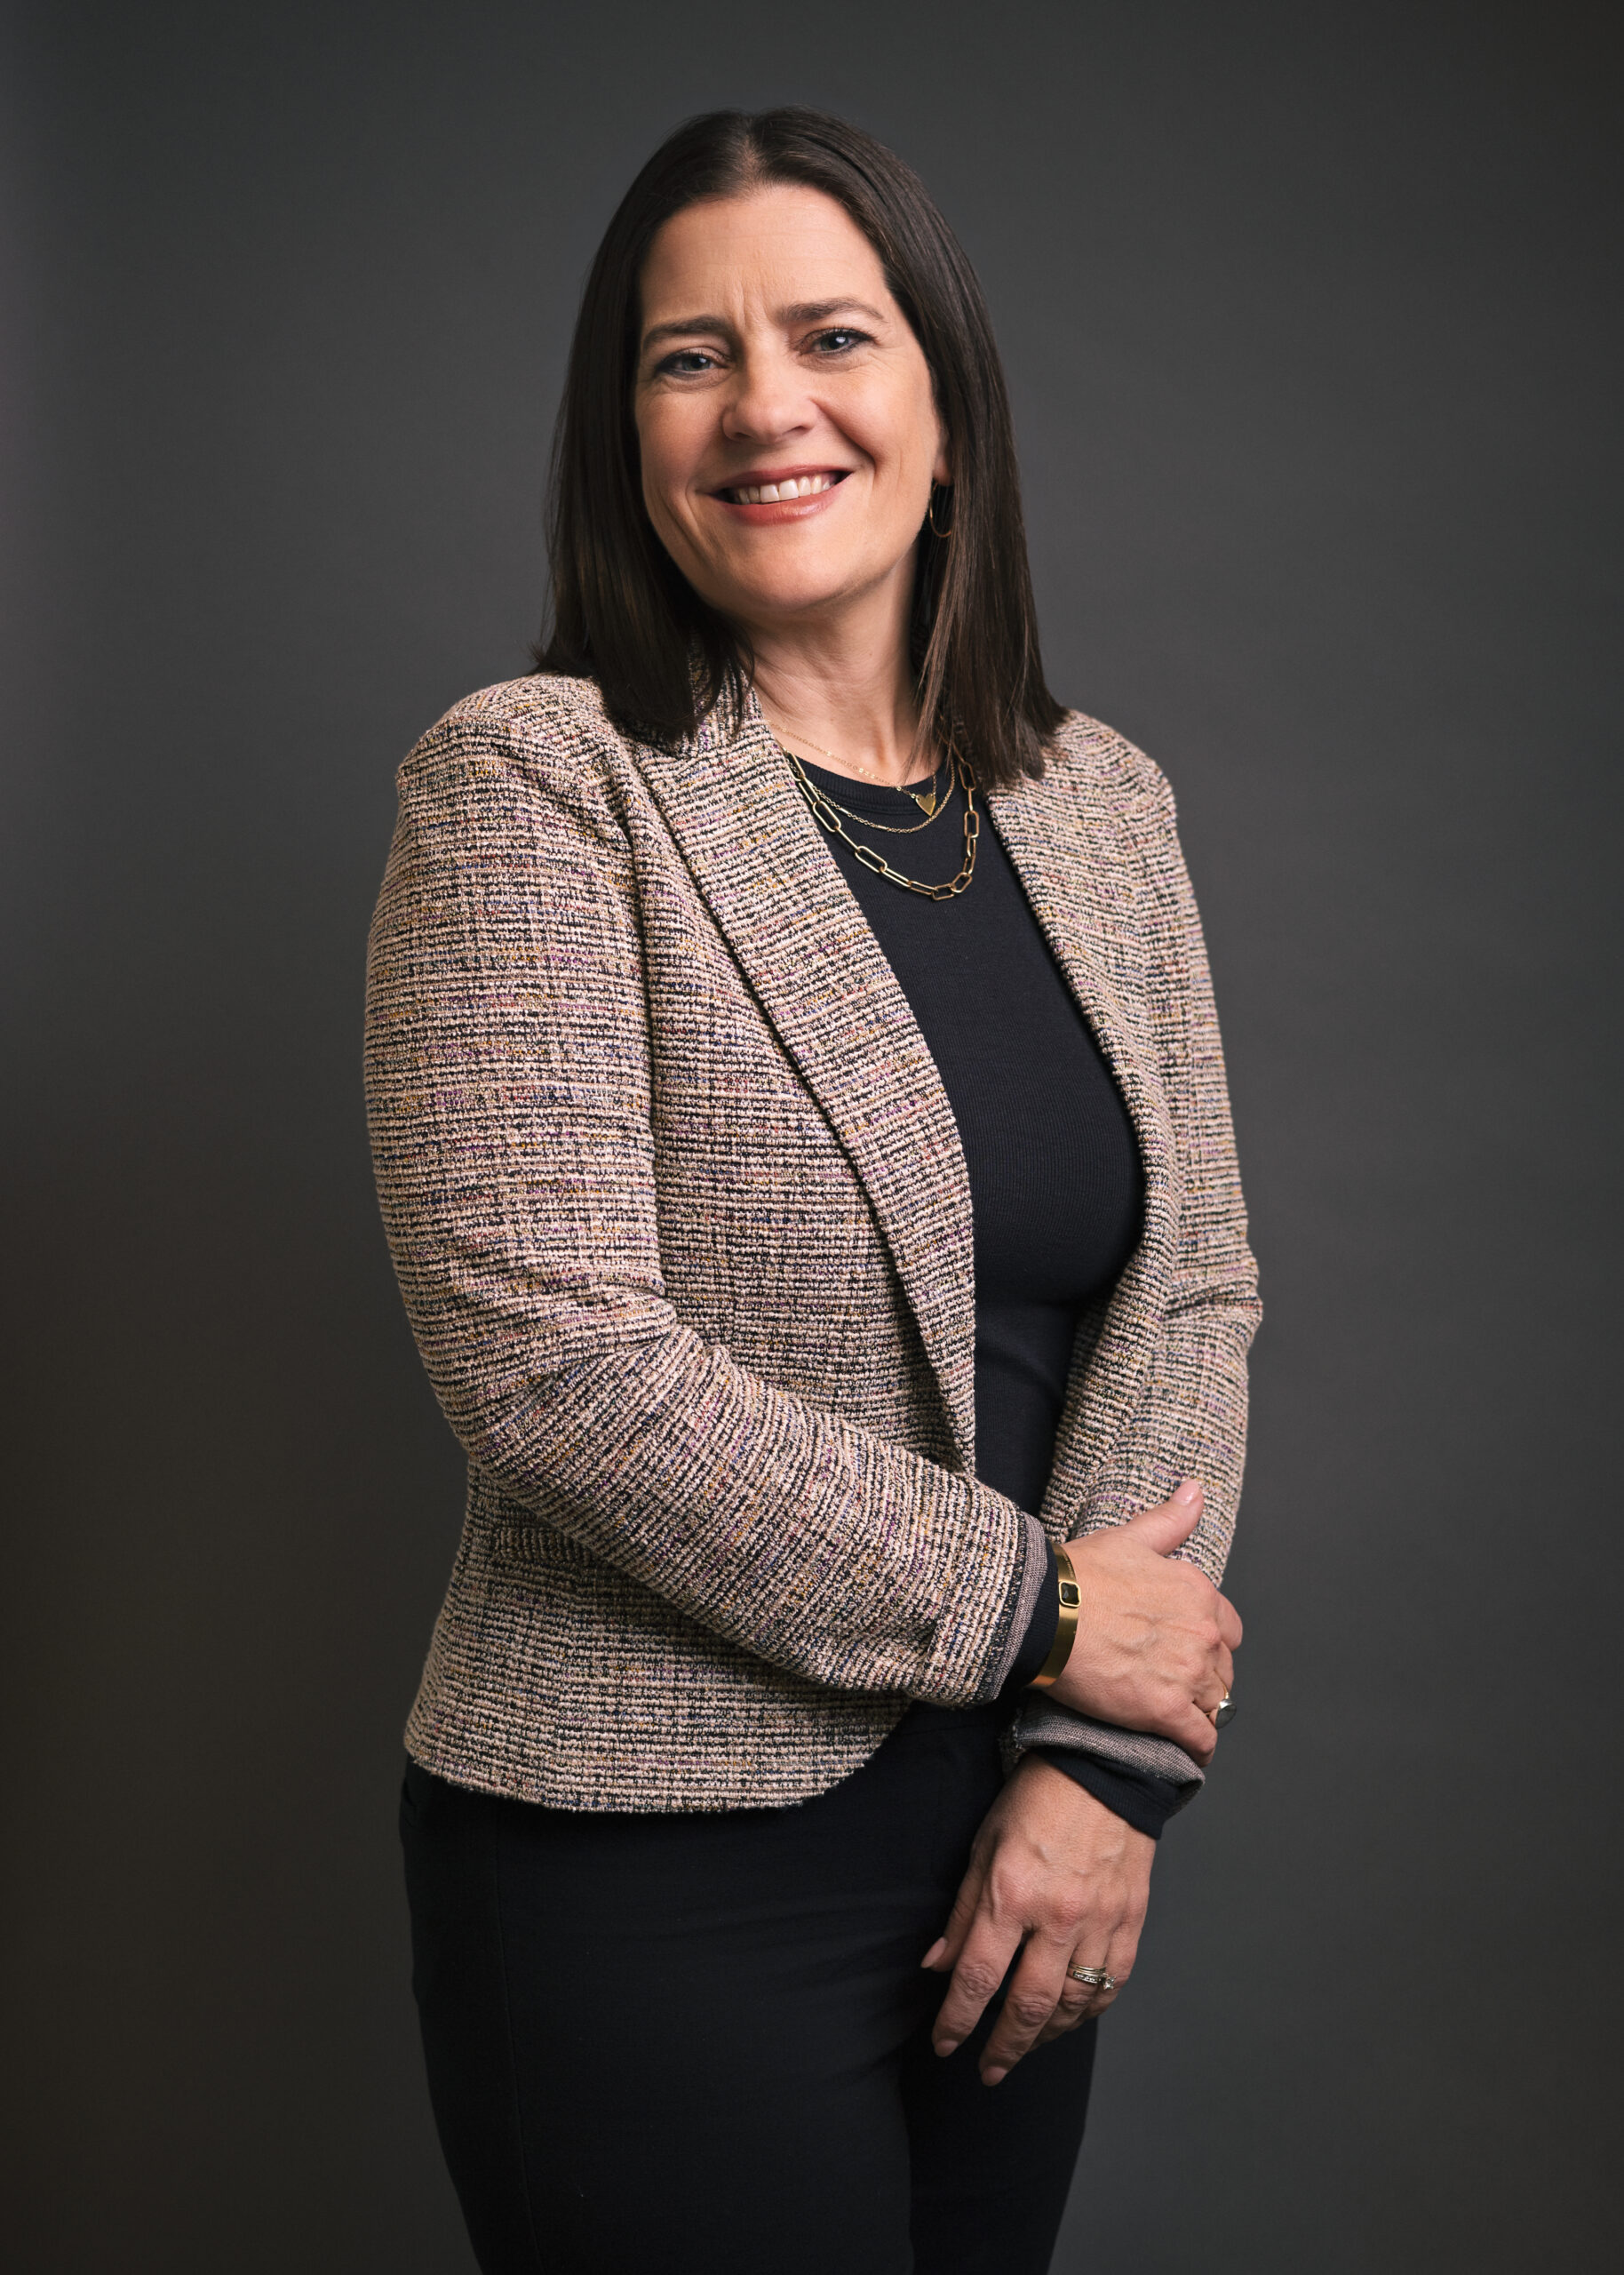 Utah Foster Care's CEO, Nikki MacKay, wins Utah Business CEO of the Year